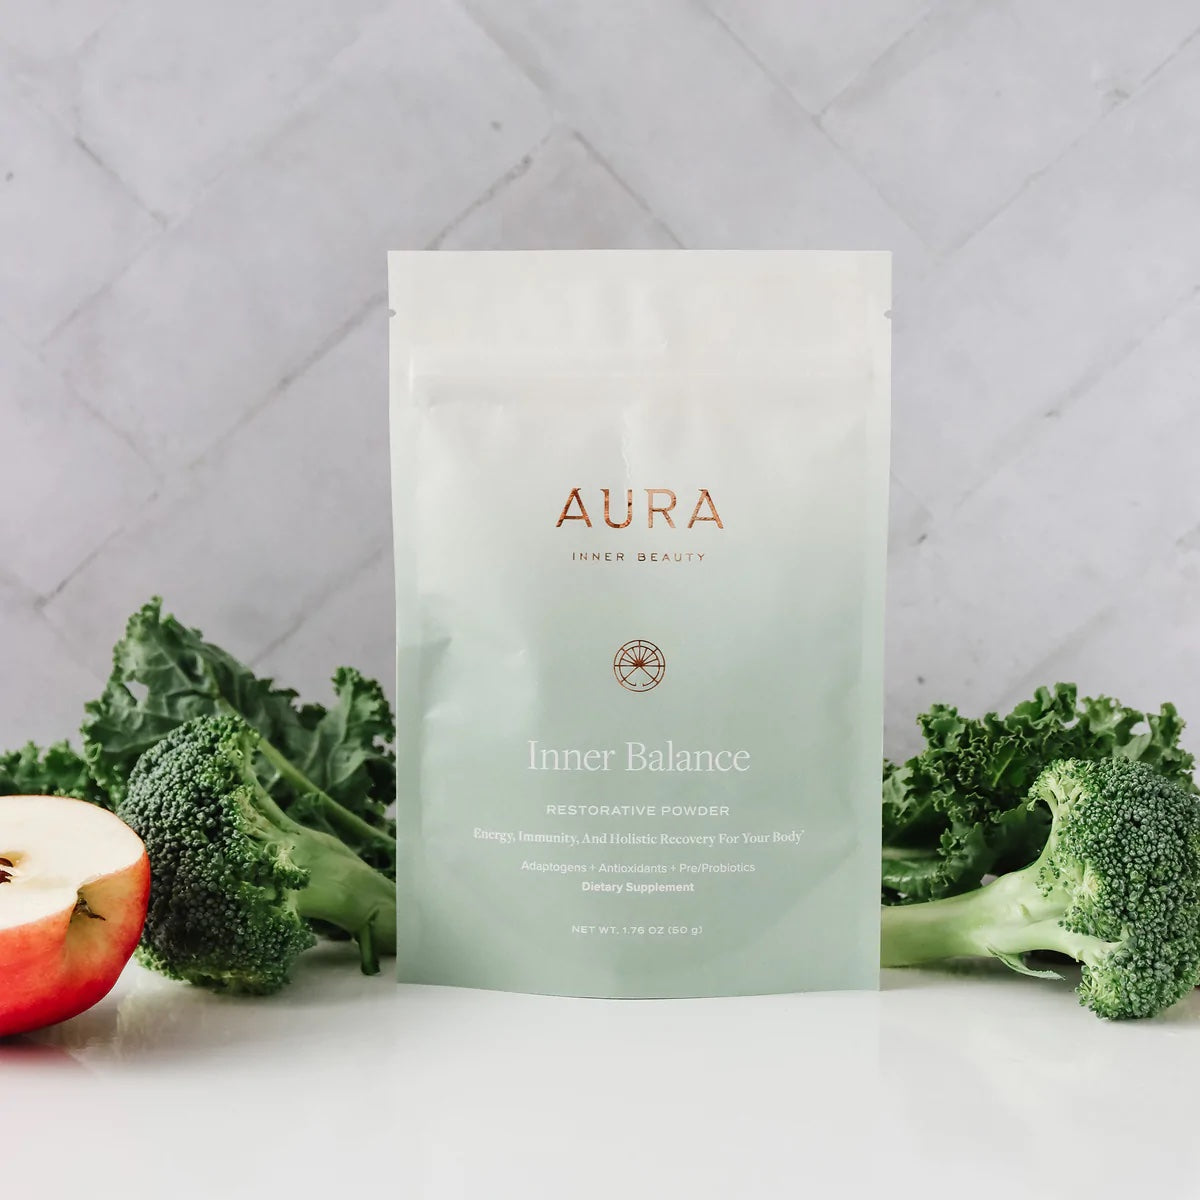 AURA Inner Beauty | Inner Balance Restorative Powder